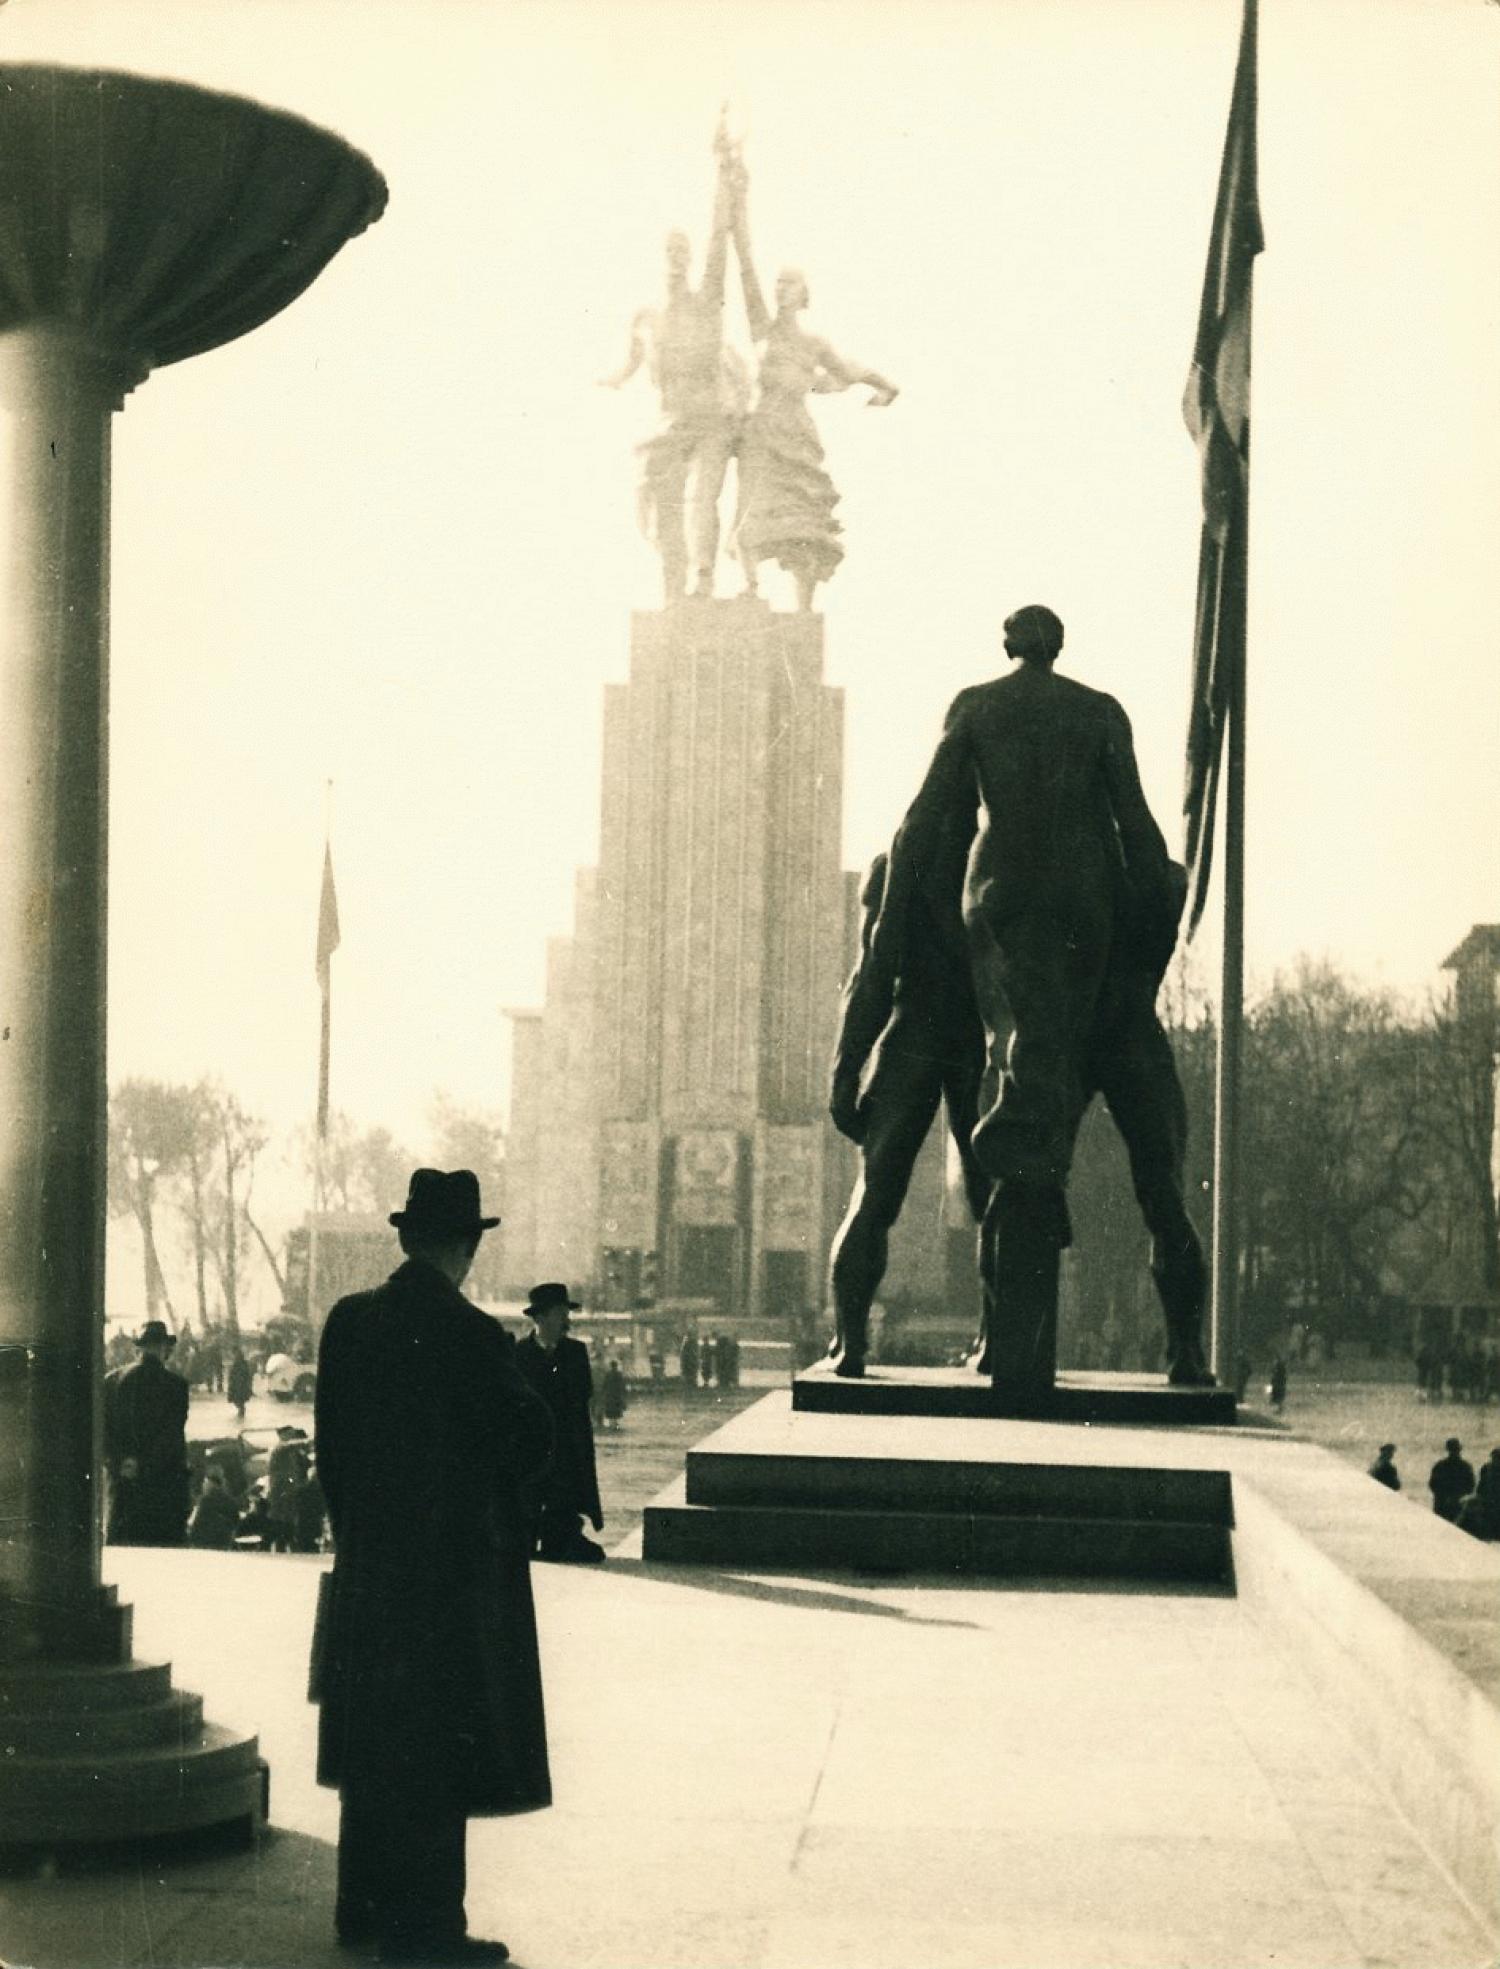 Arthur Fleischmann photograph of the German and Russian Pavilions at the 1937 Paris World Fair